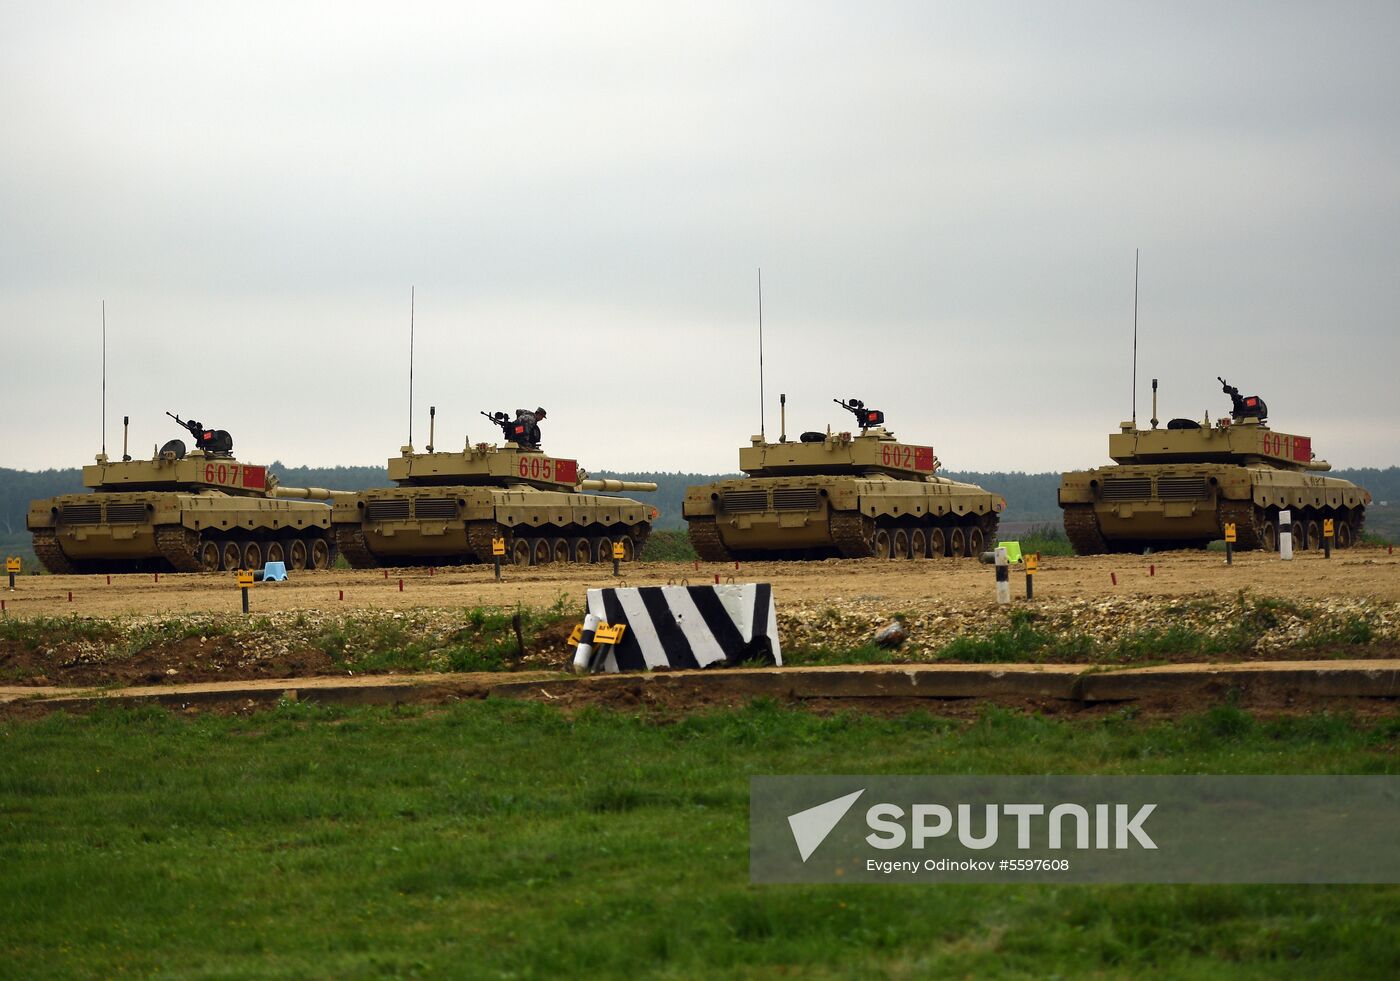 Preparations for Tank Biathlon 2018 international competition